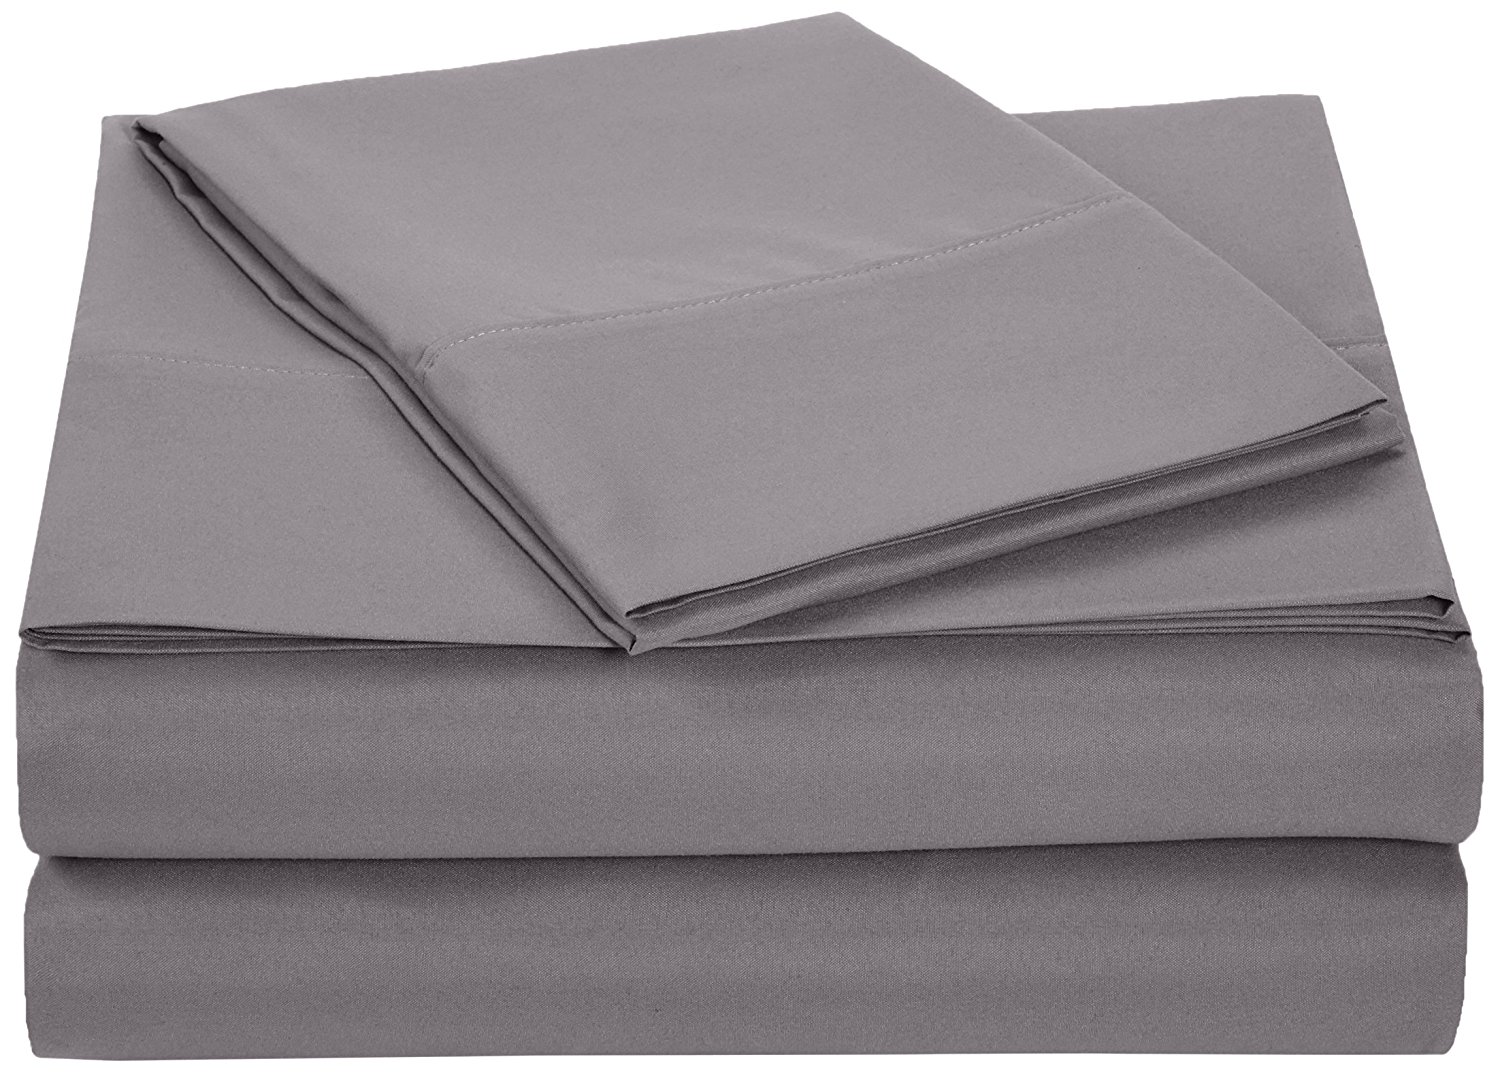 AmazonBasics Microfiber Sheet Set - Twin Extra-Long, Dark Grey